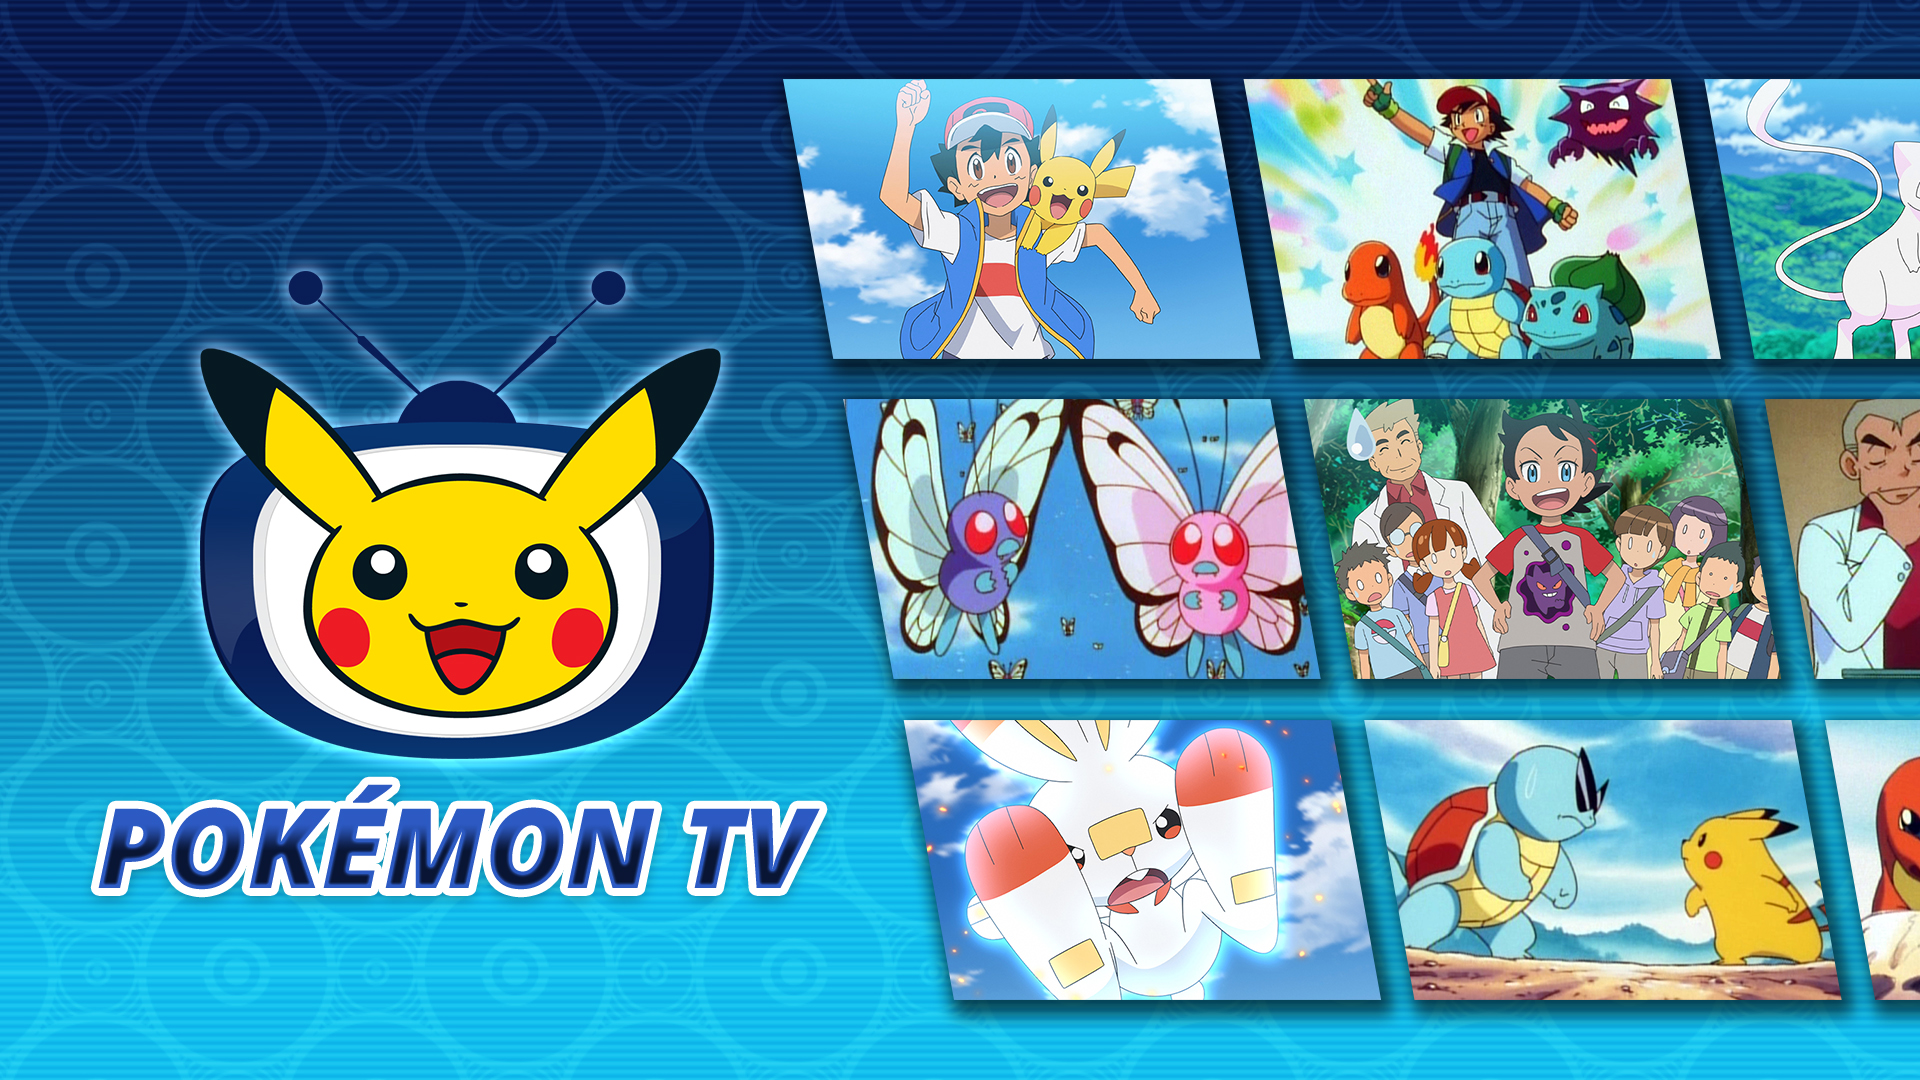 New pokemon game - Play Pikachu pokemon free online - Solitaire Online